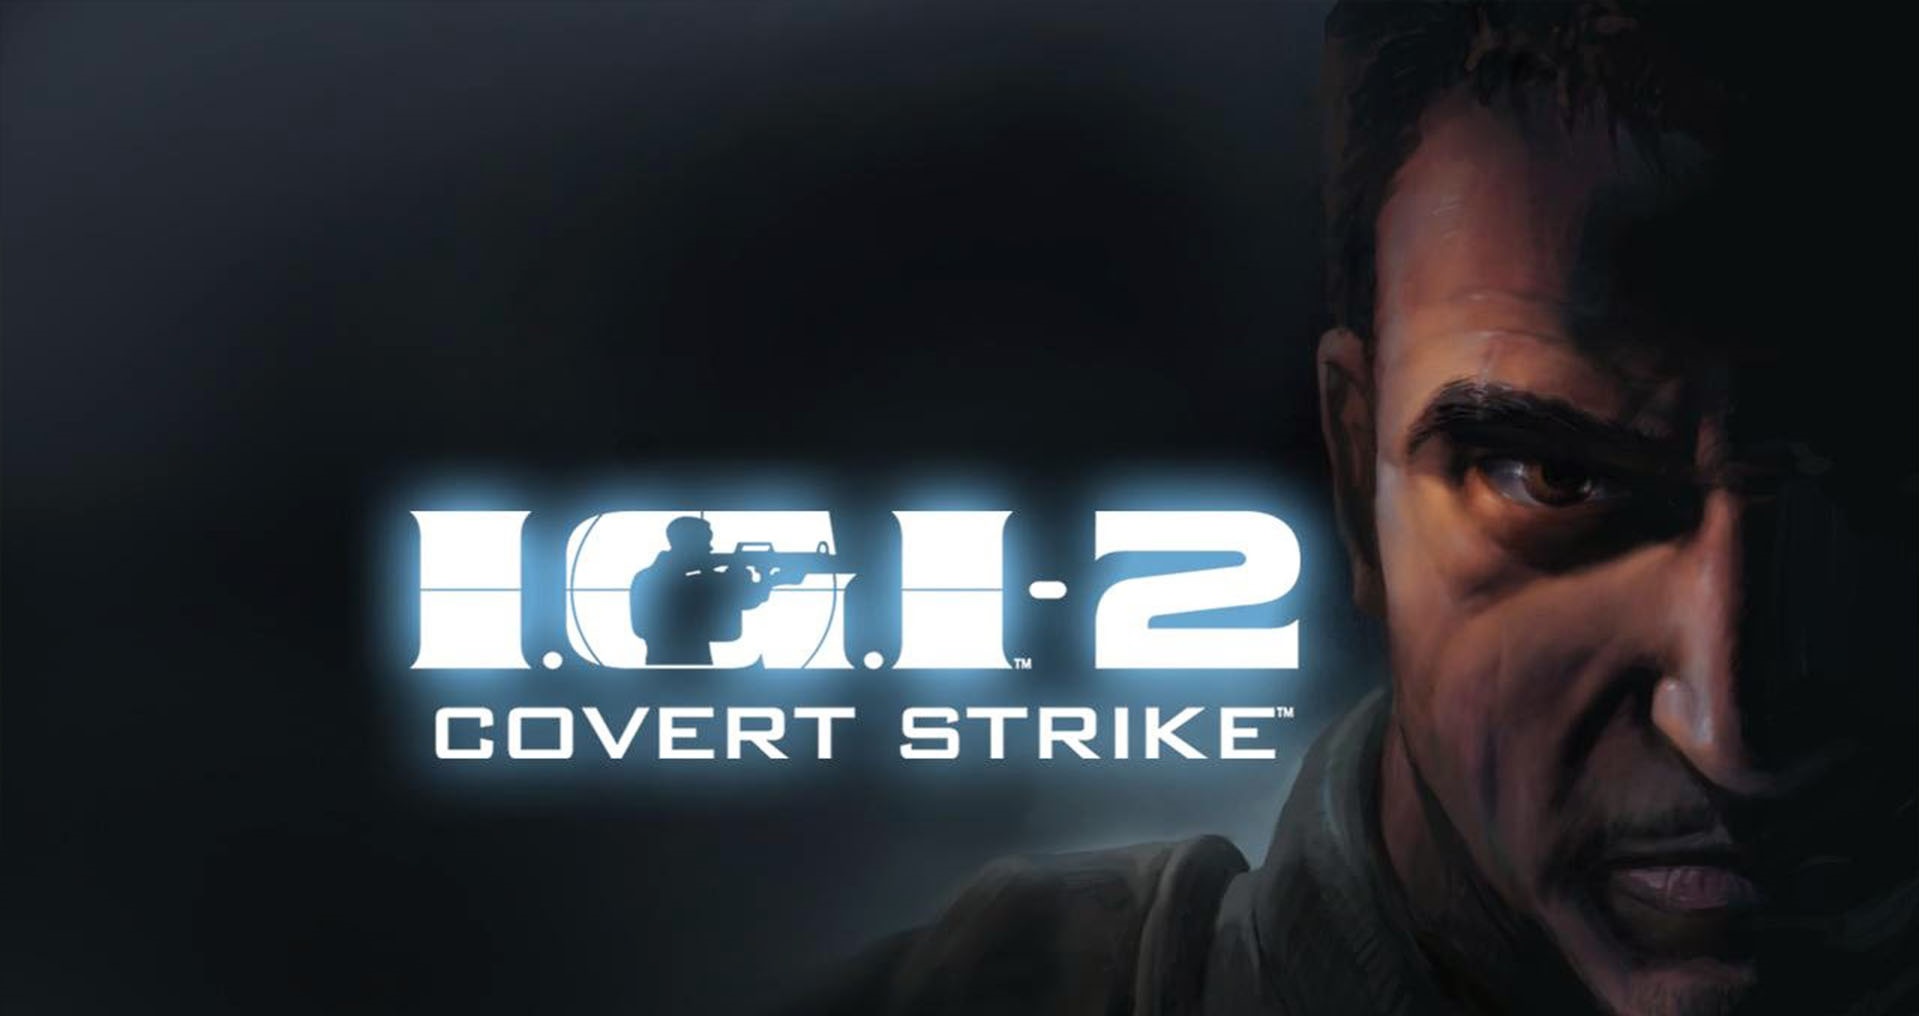 Www game 2 com. Project i.g.i. 2: Covert Strike. Игра IGI 2. Игра IGI 1. IGI 2 Covert Strike.